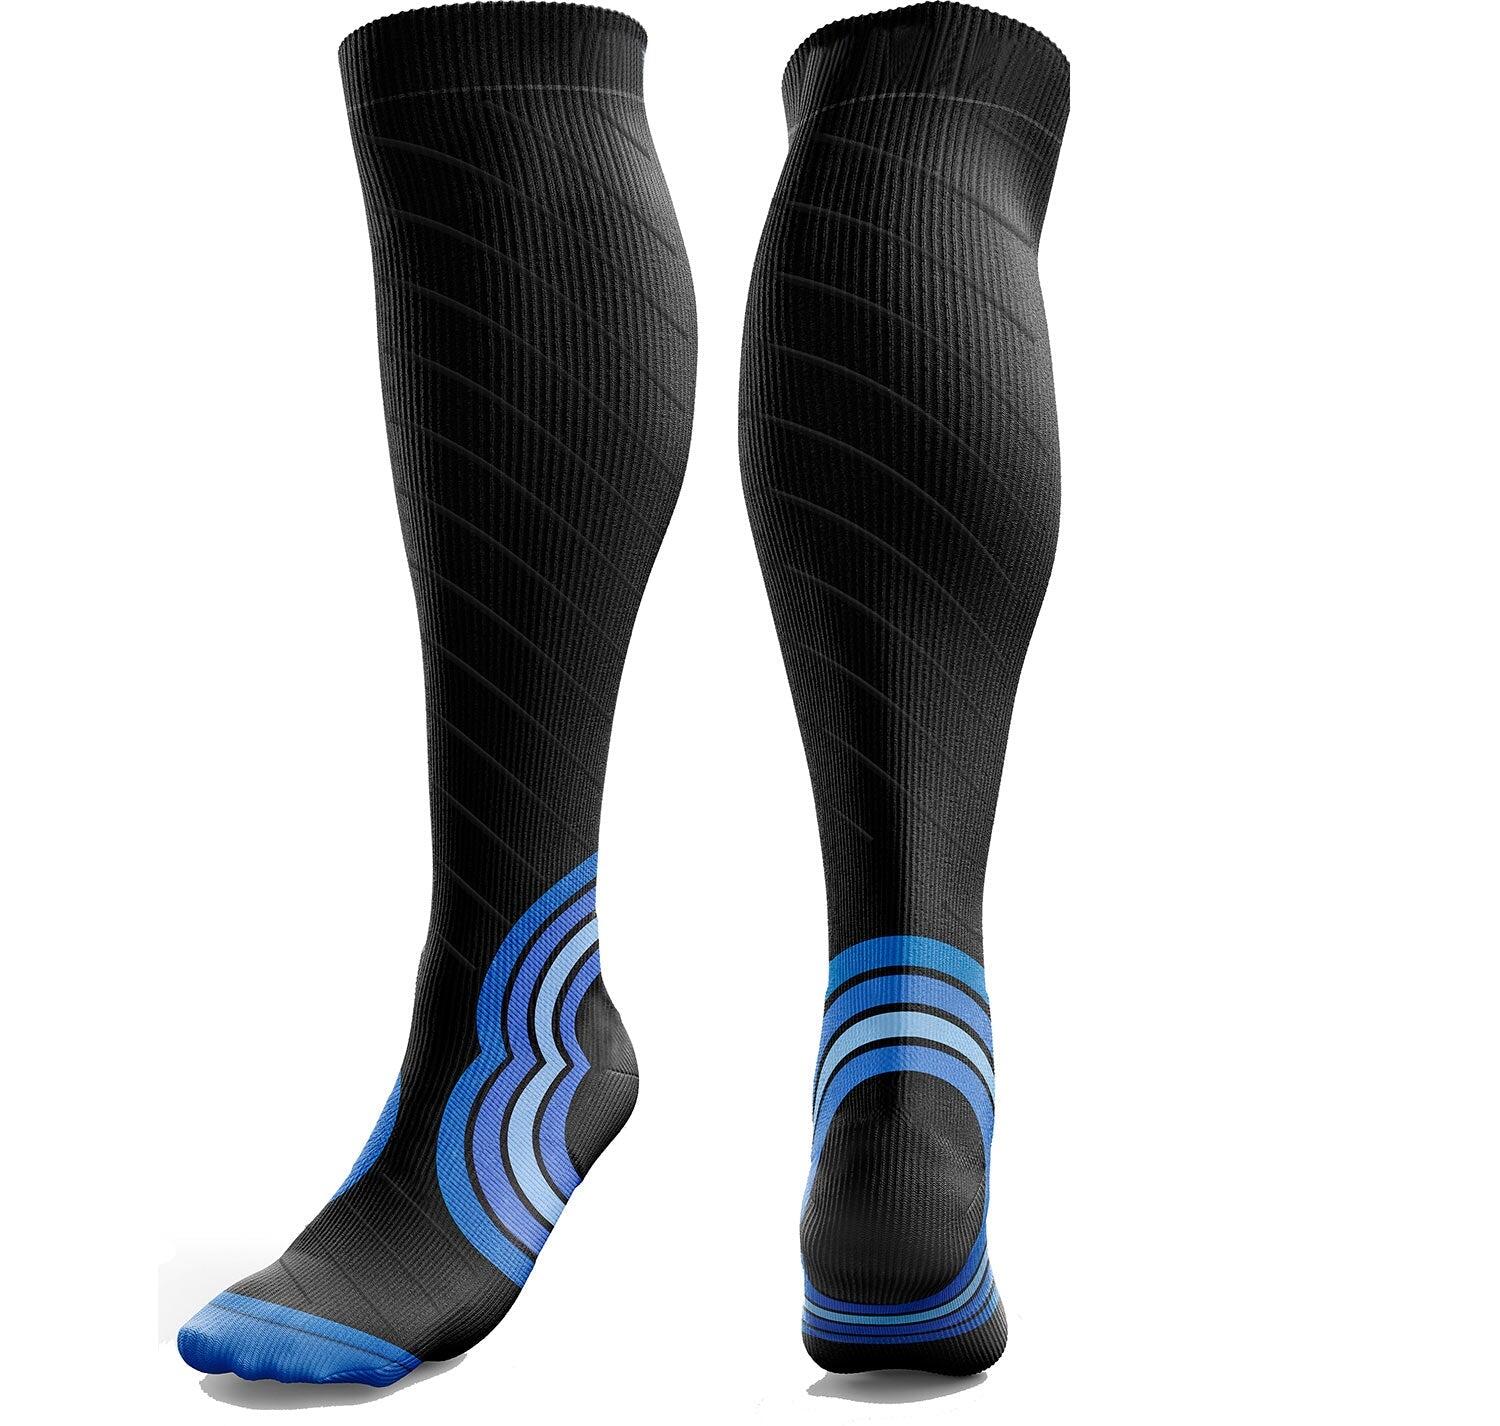 AZENGEAR Calf Support Compression Socks for Men & Women (20-30 mmHg)(Black w/Blue)